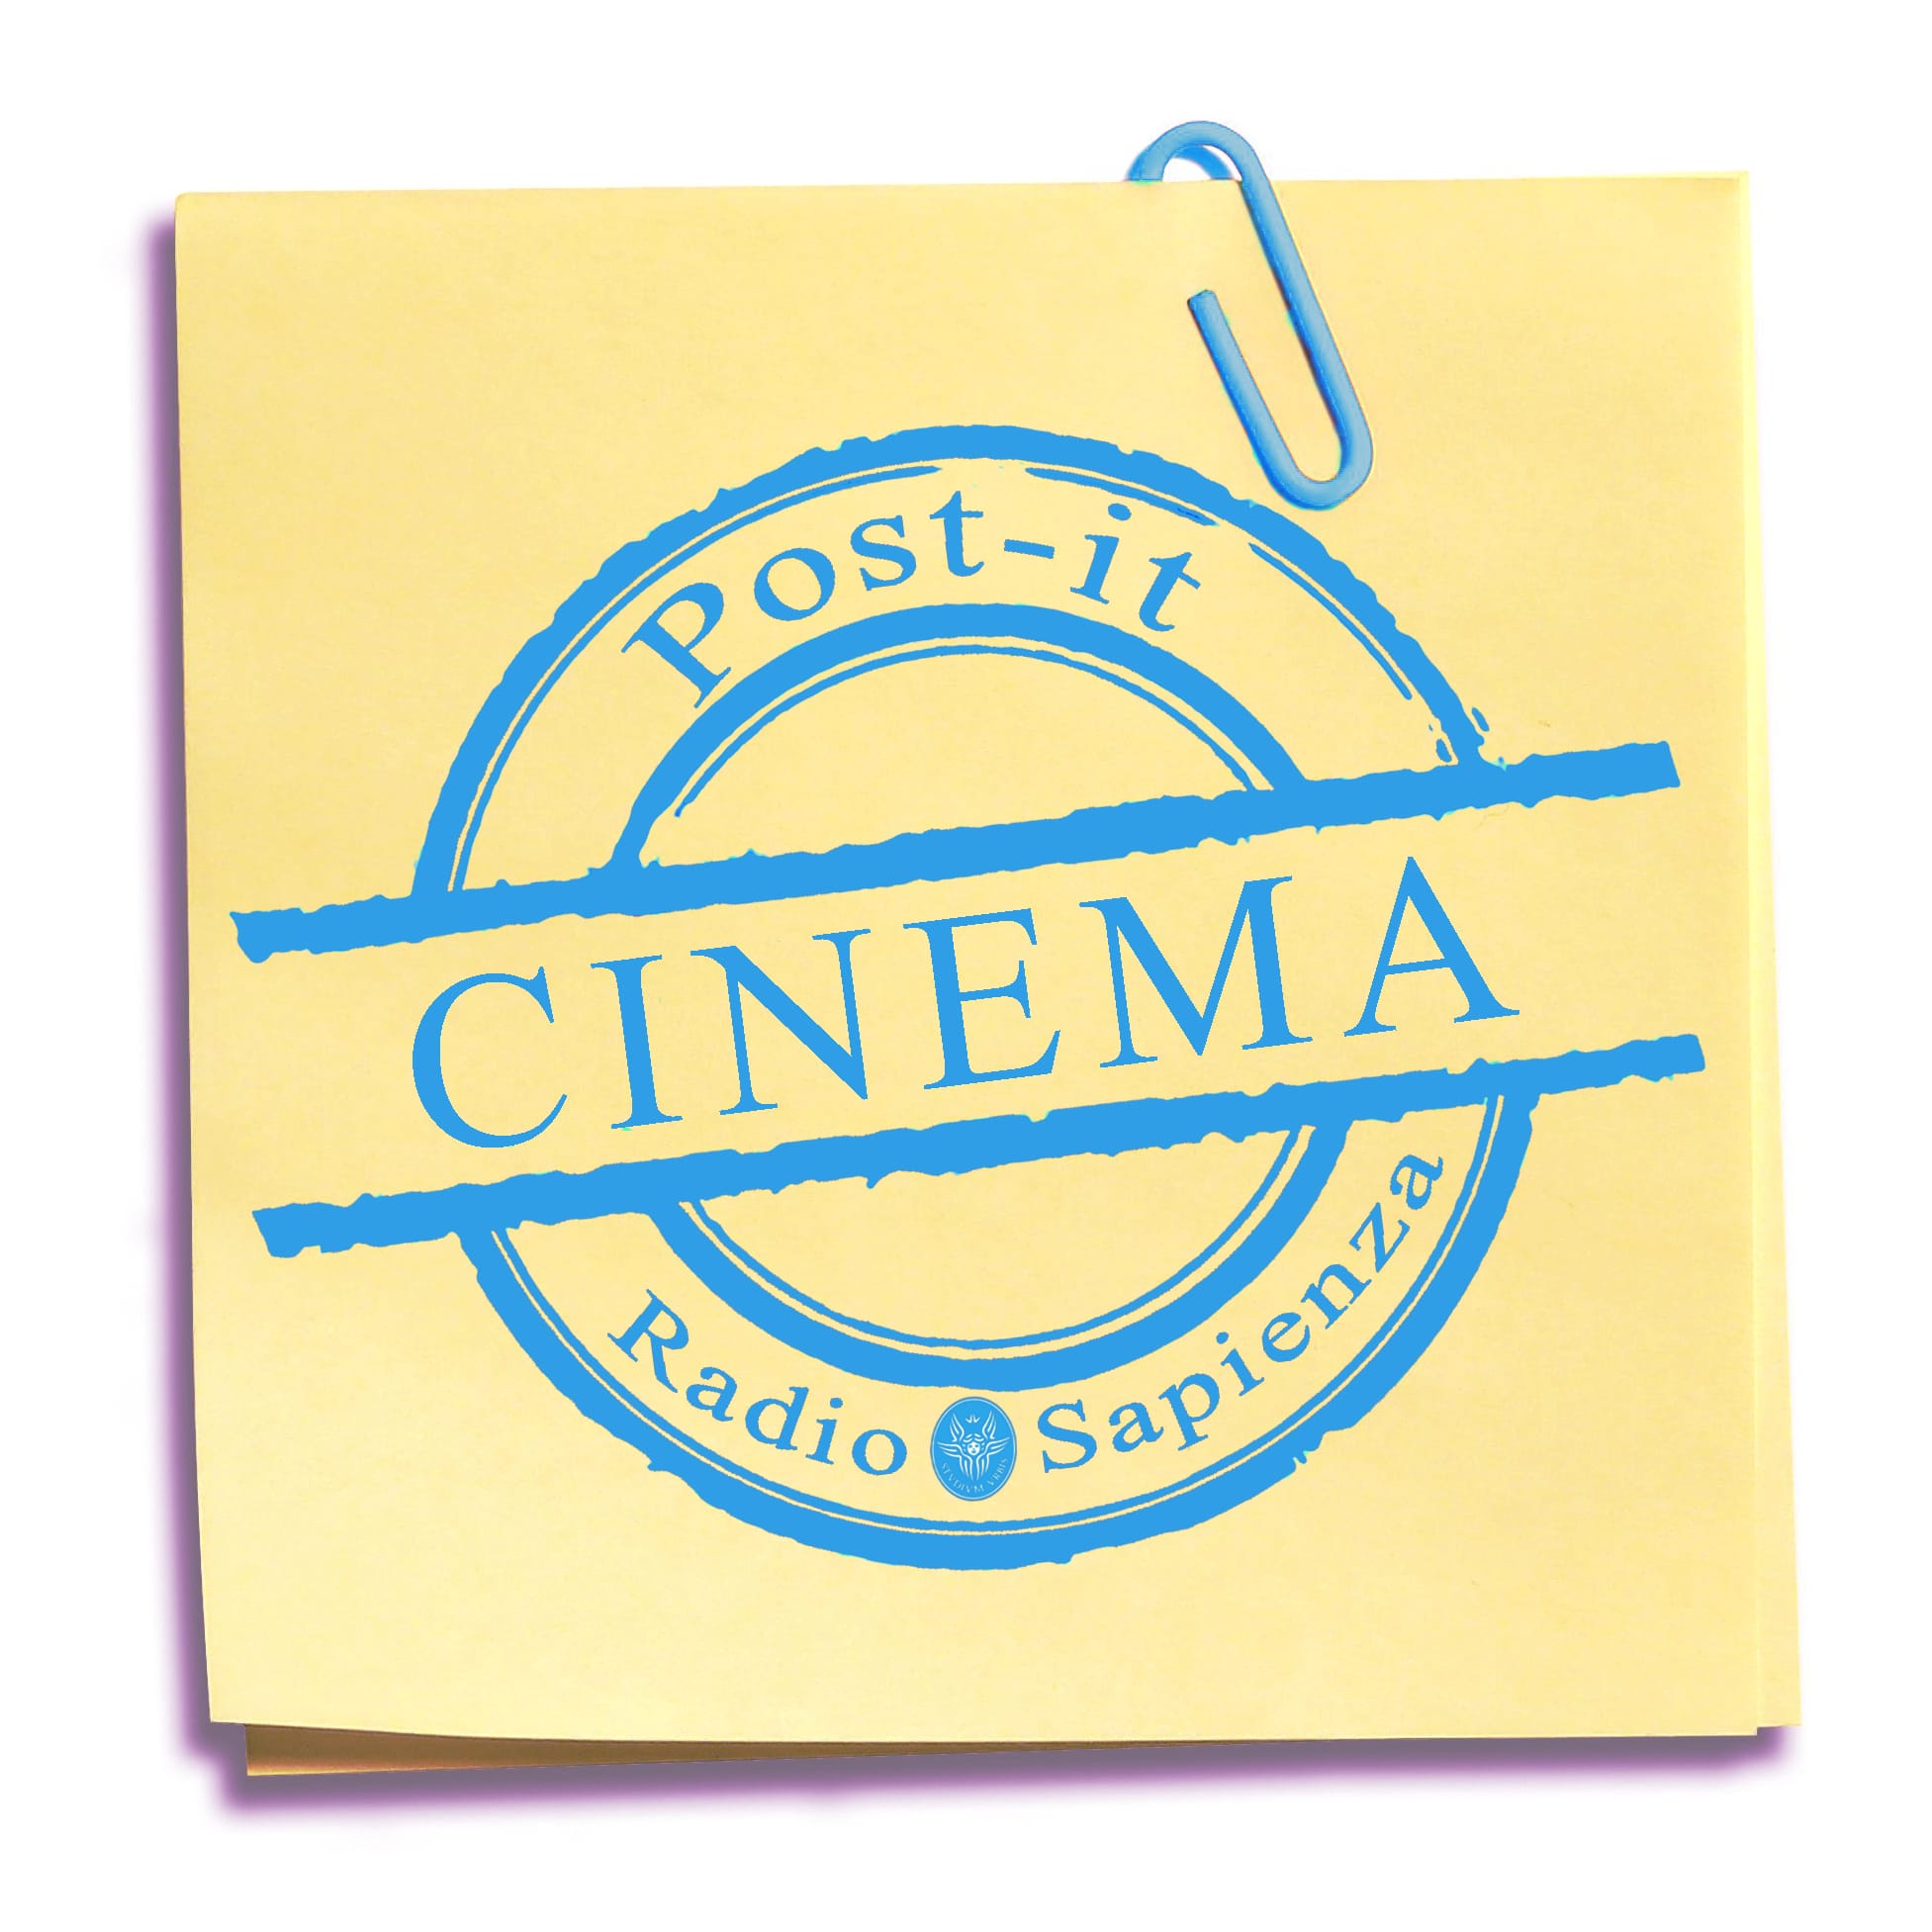 Post-it Cinema – Venerdì 3 Dicembre